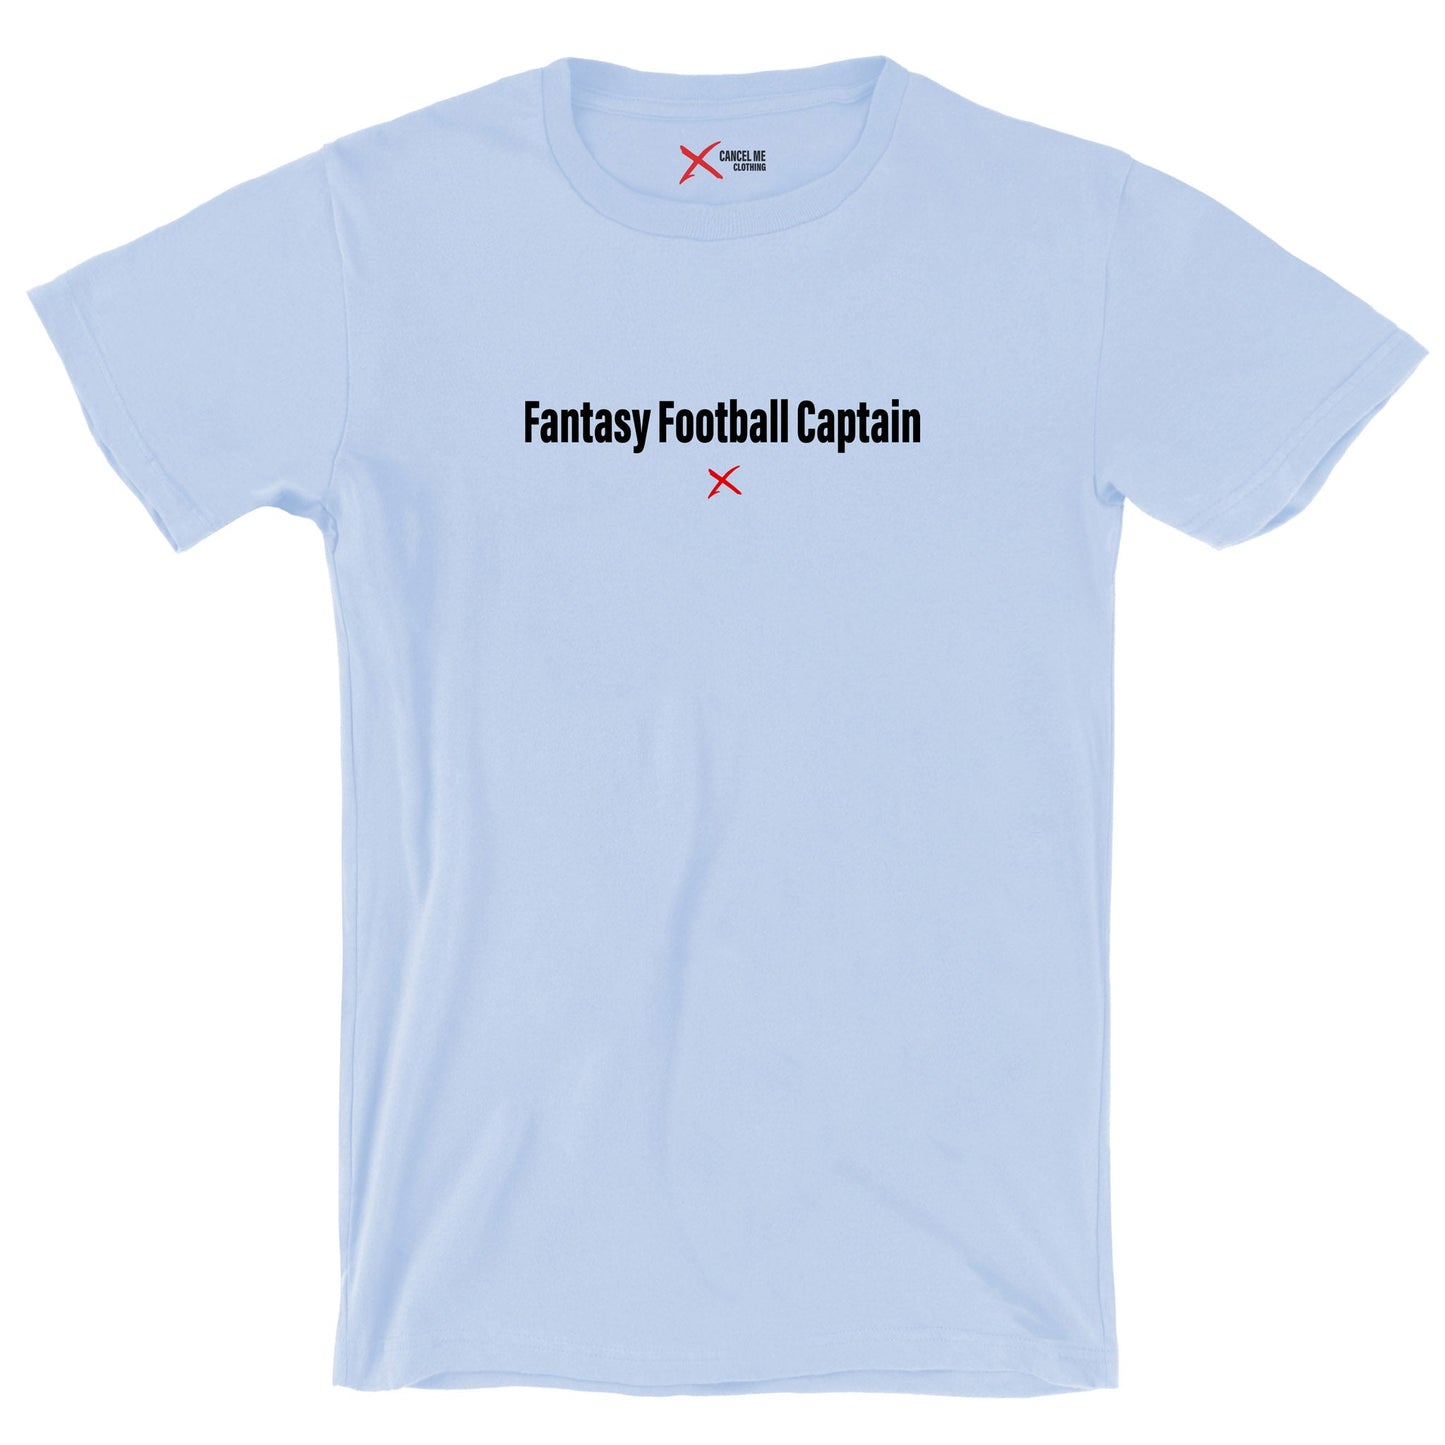 Fantasy Football Captain - Shirt